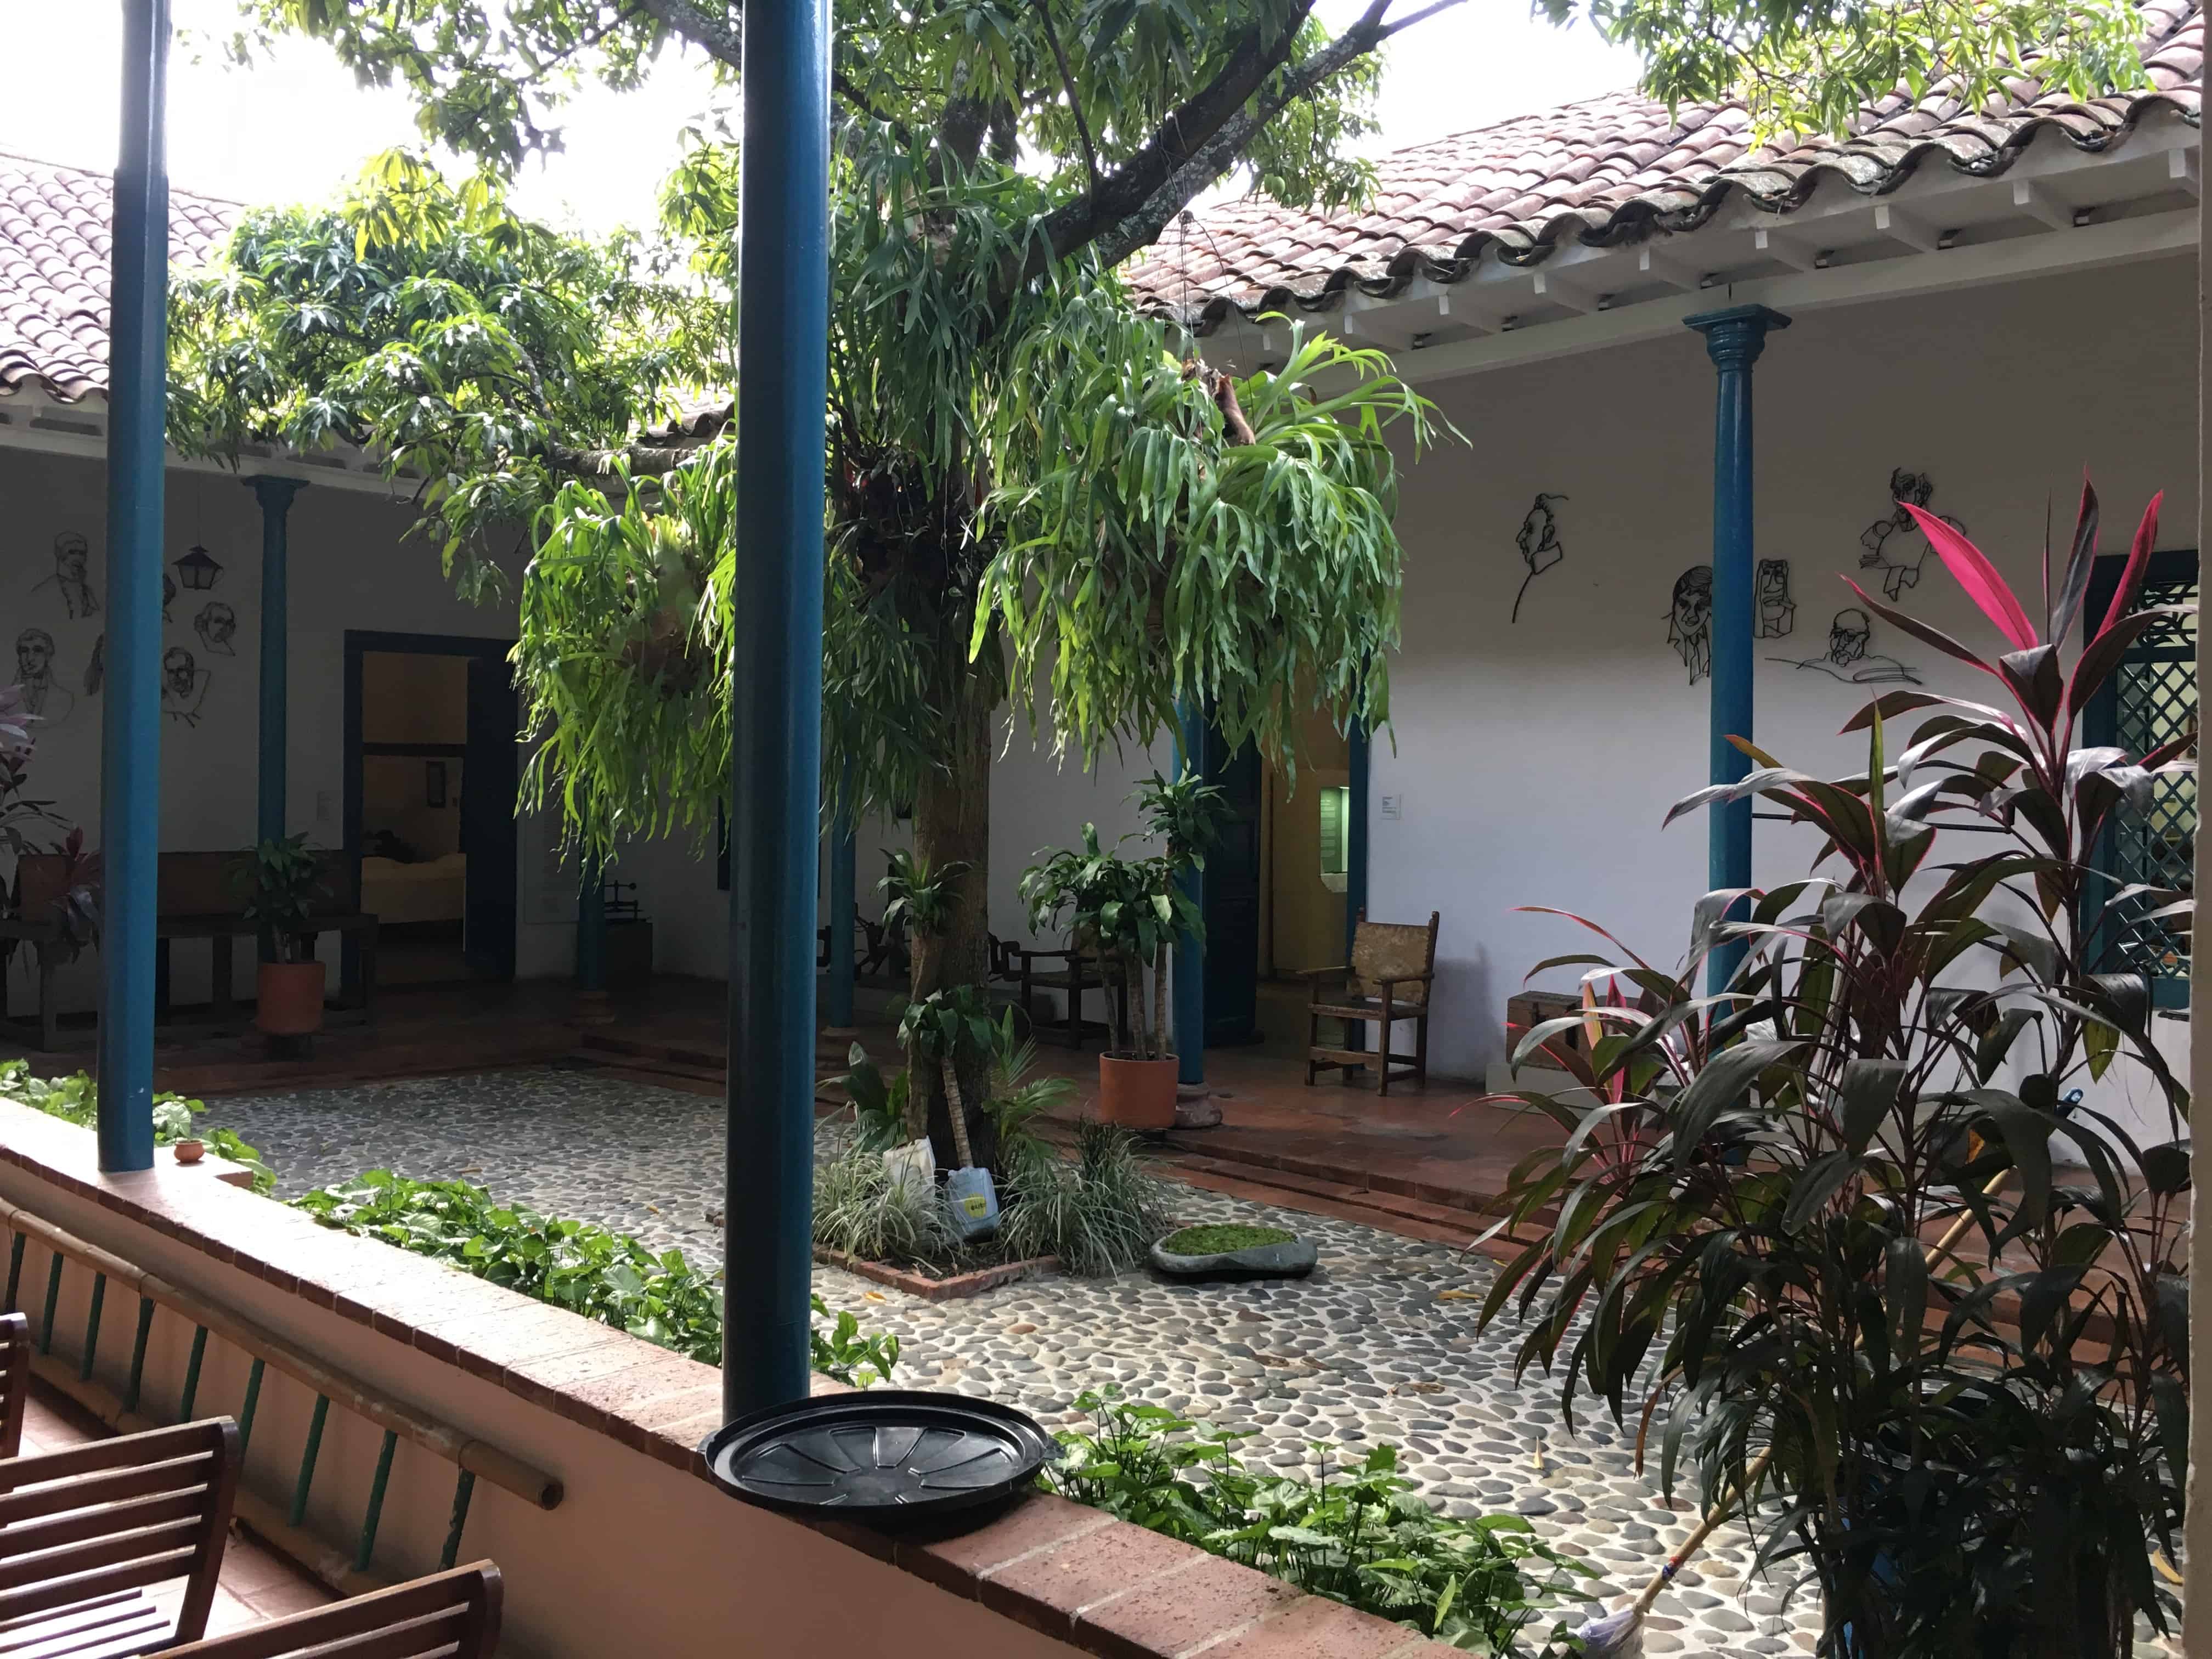 Courtyard of the Juan del Corral Museum in Santa Fe de Antioquia, Colombia